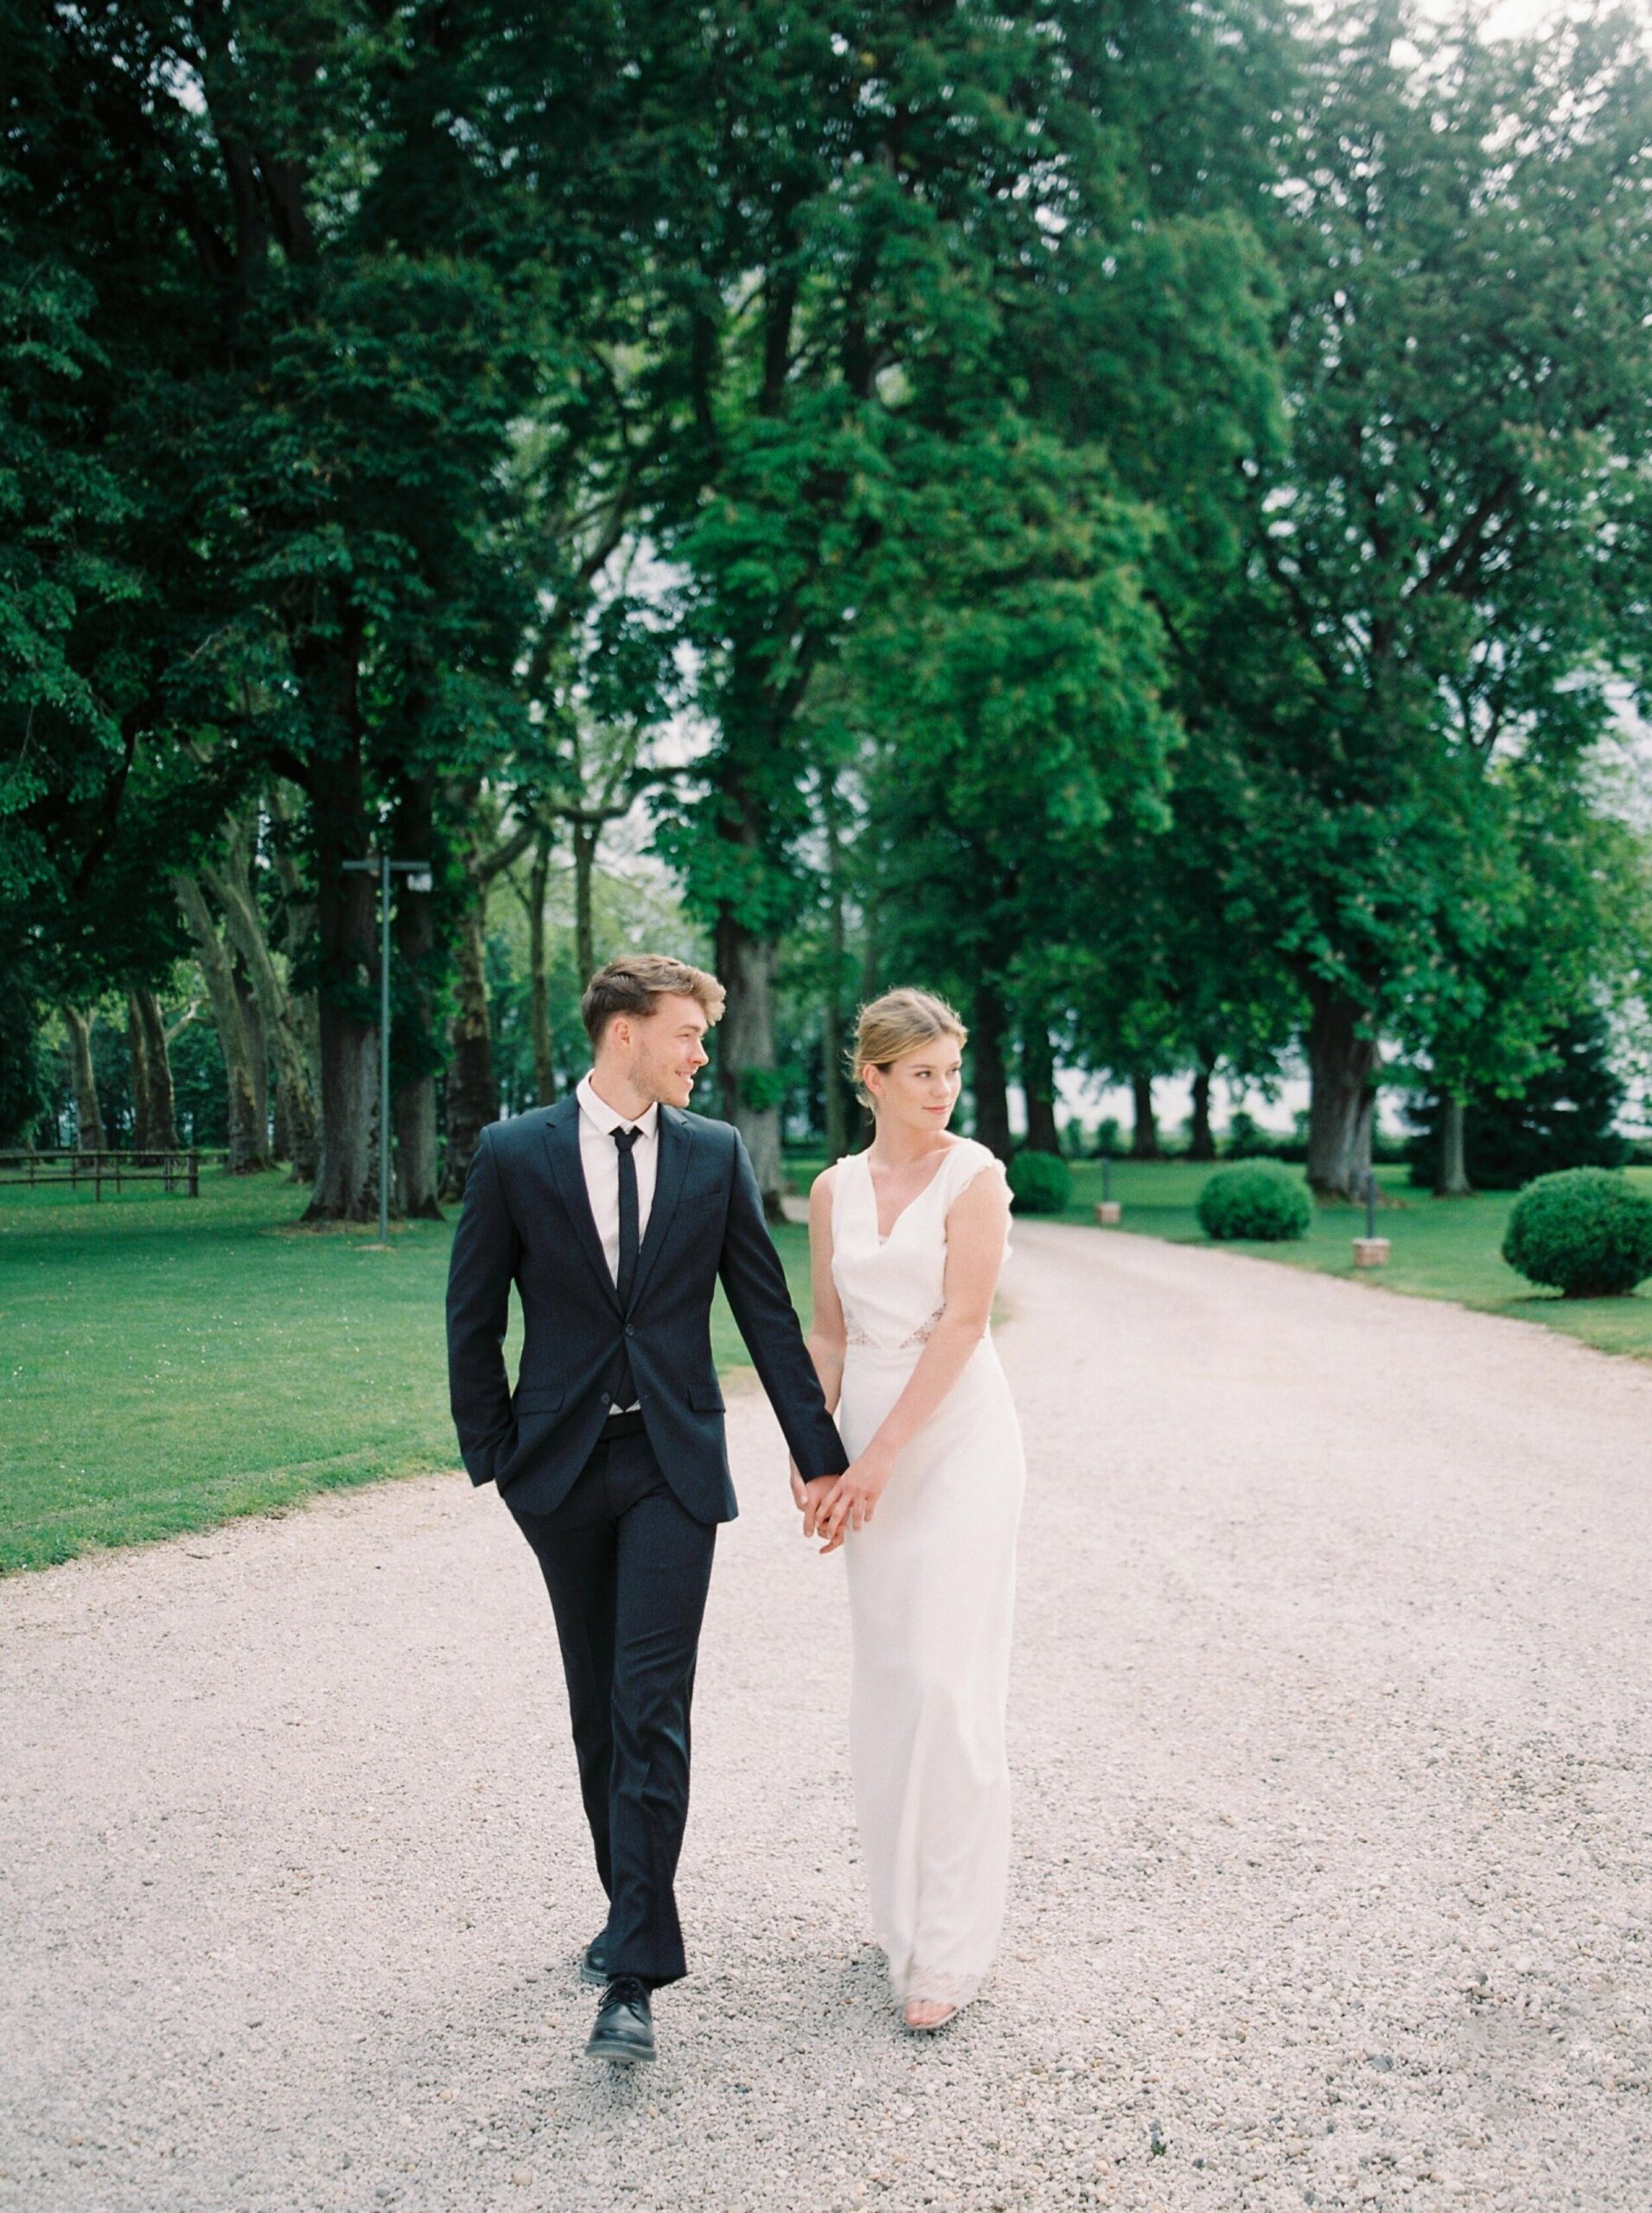  bride and groom portrait at french Chateau wedding | Paris wedding photographer | fine art film photographer 